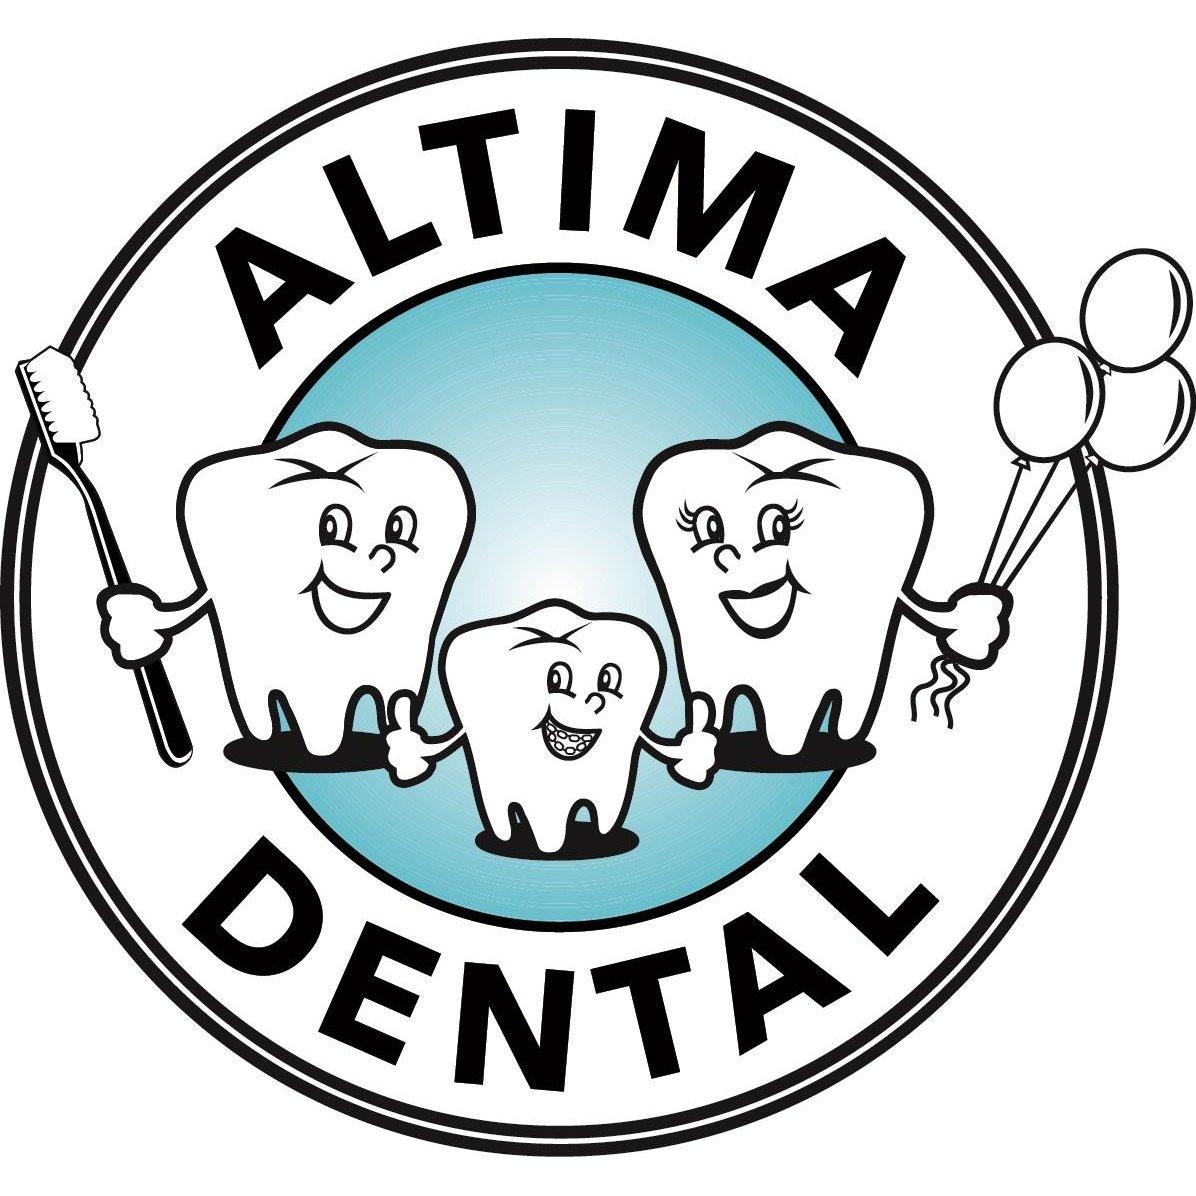 Altima Dental